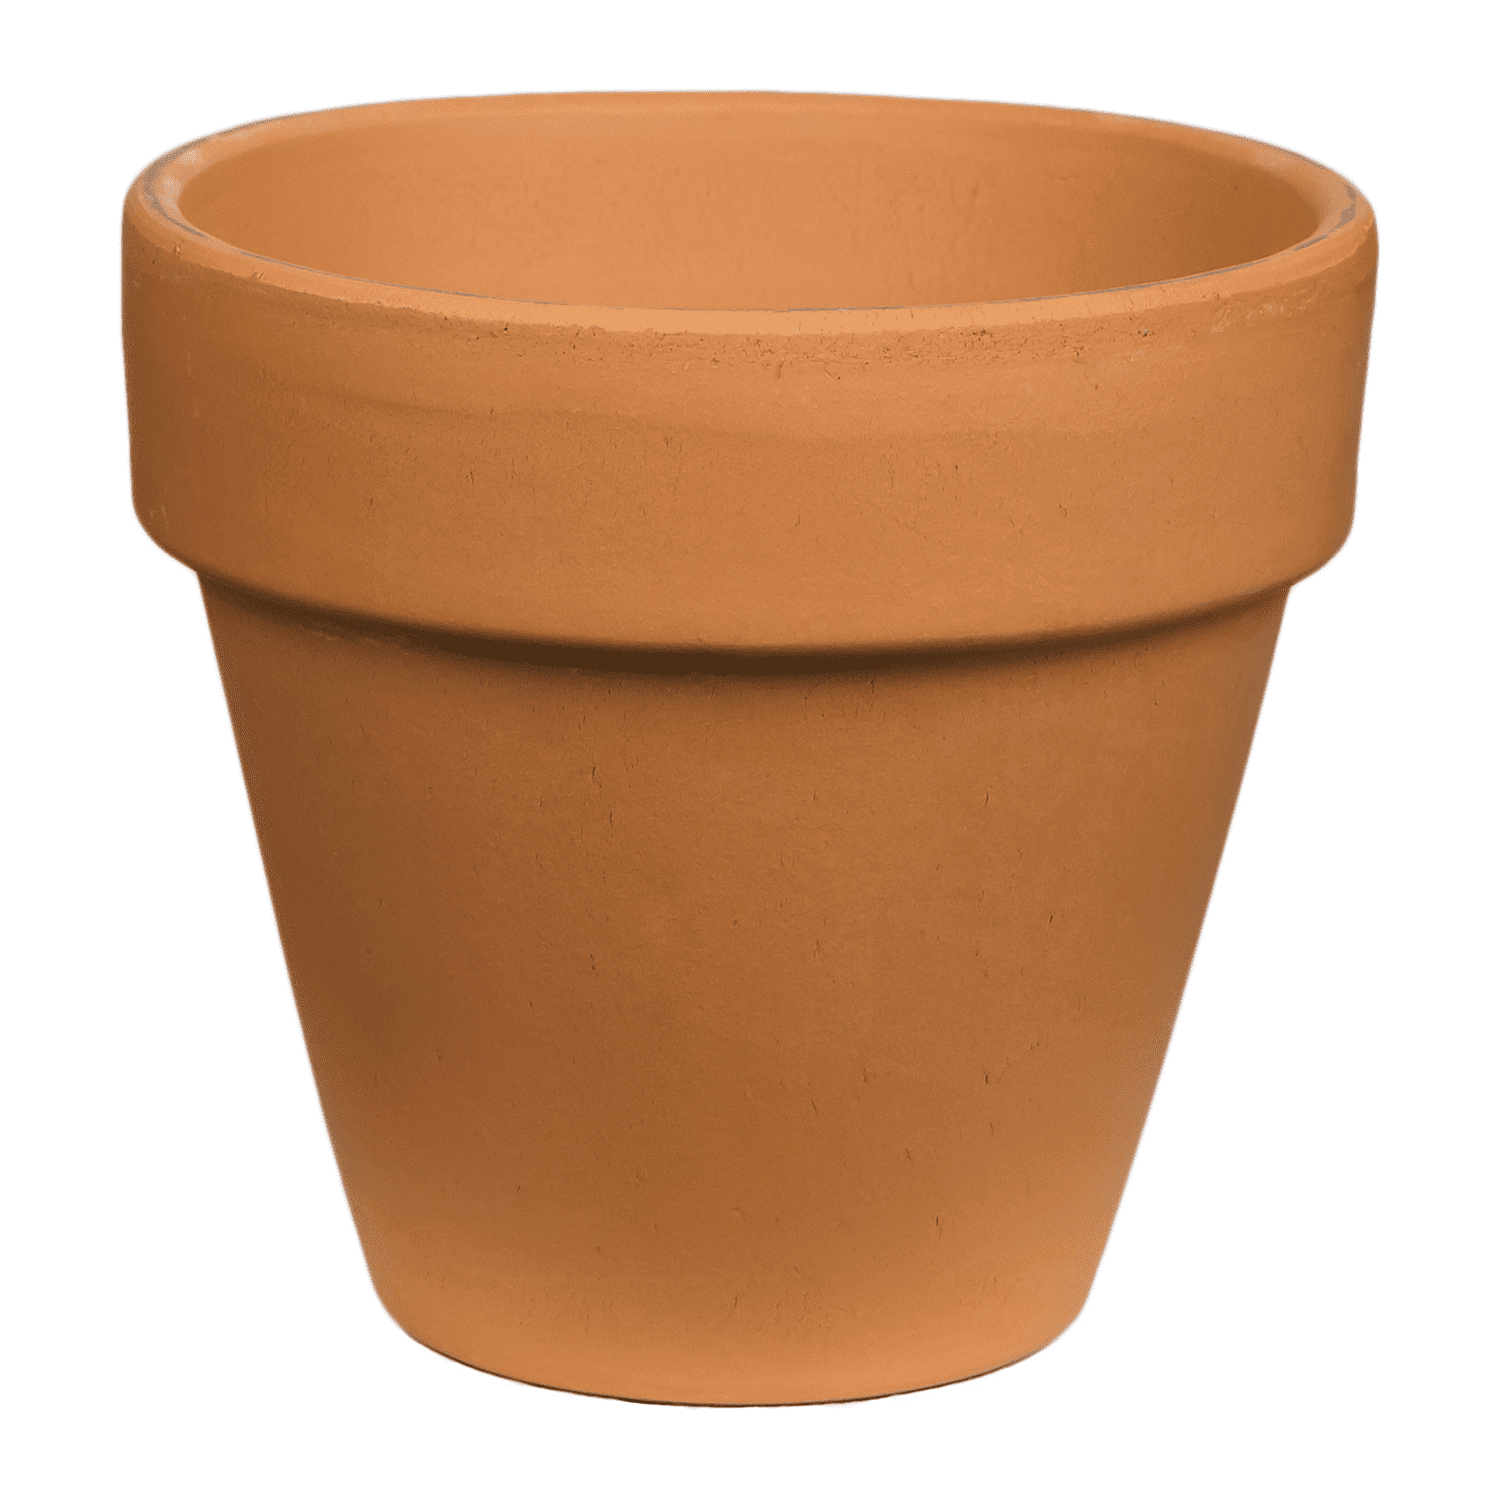 Pennington Red Terra Cotta Clay Planter, 8 inch Pot 